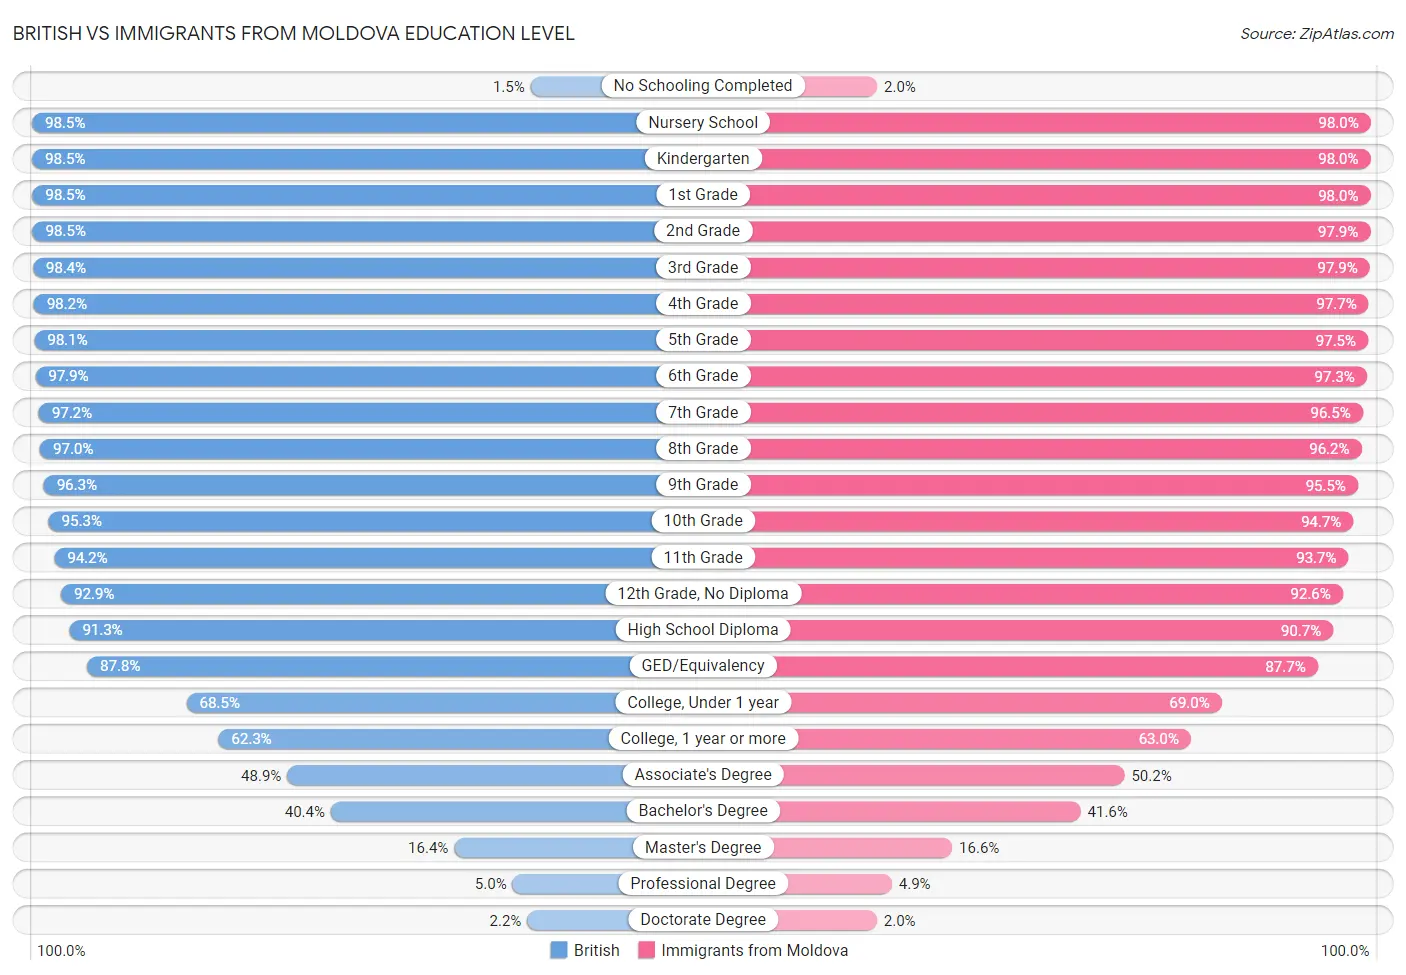 British vs Immigrants from Moldova Education Level